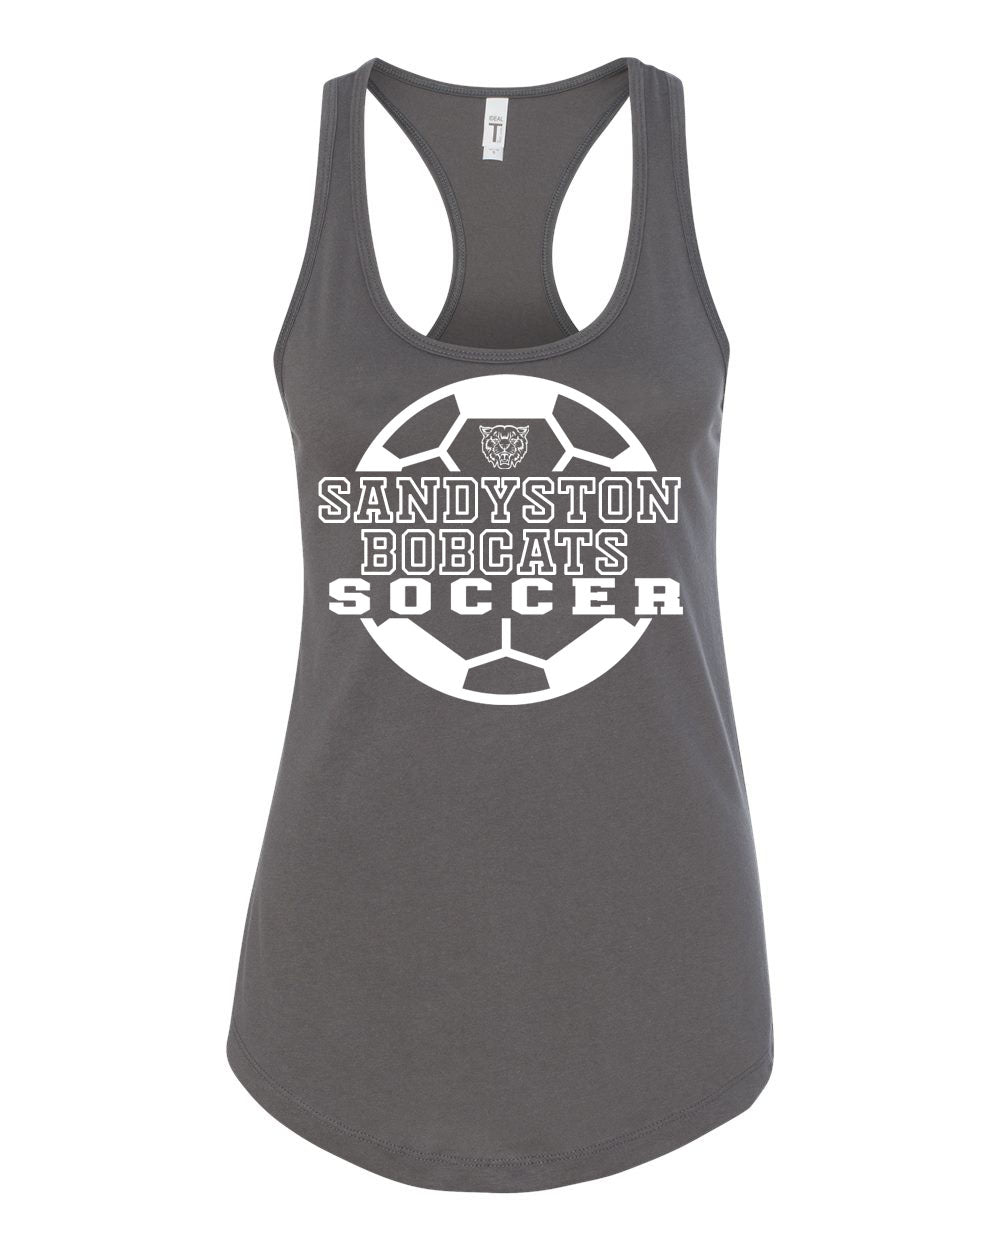 Sandyston Soccer Design 2 Tank Top